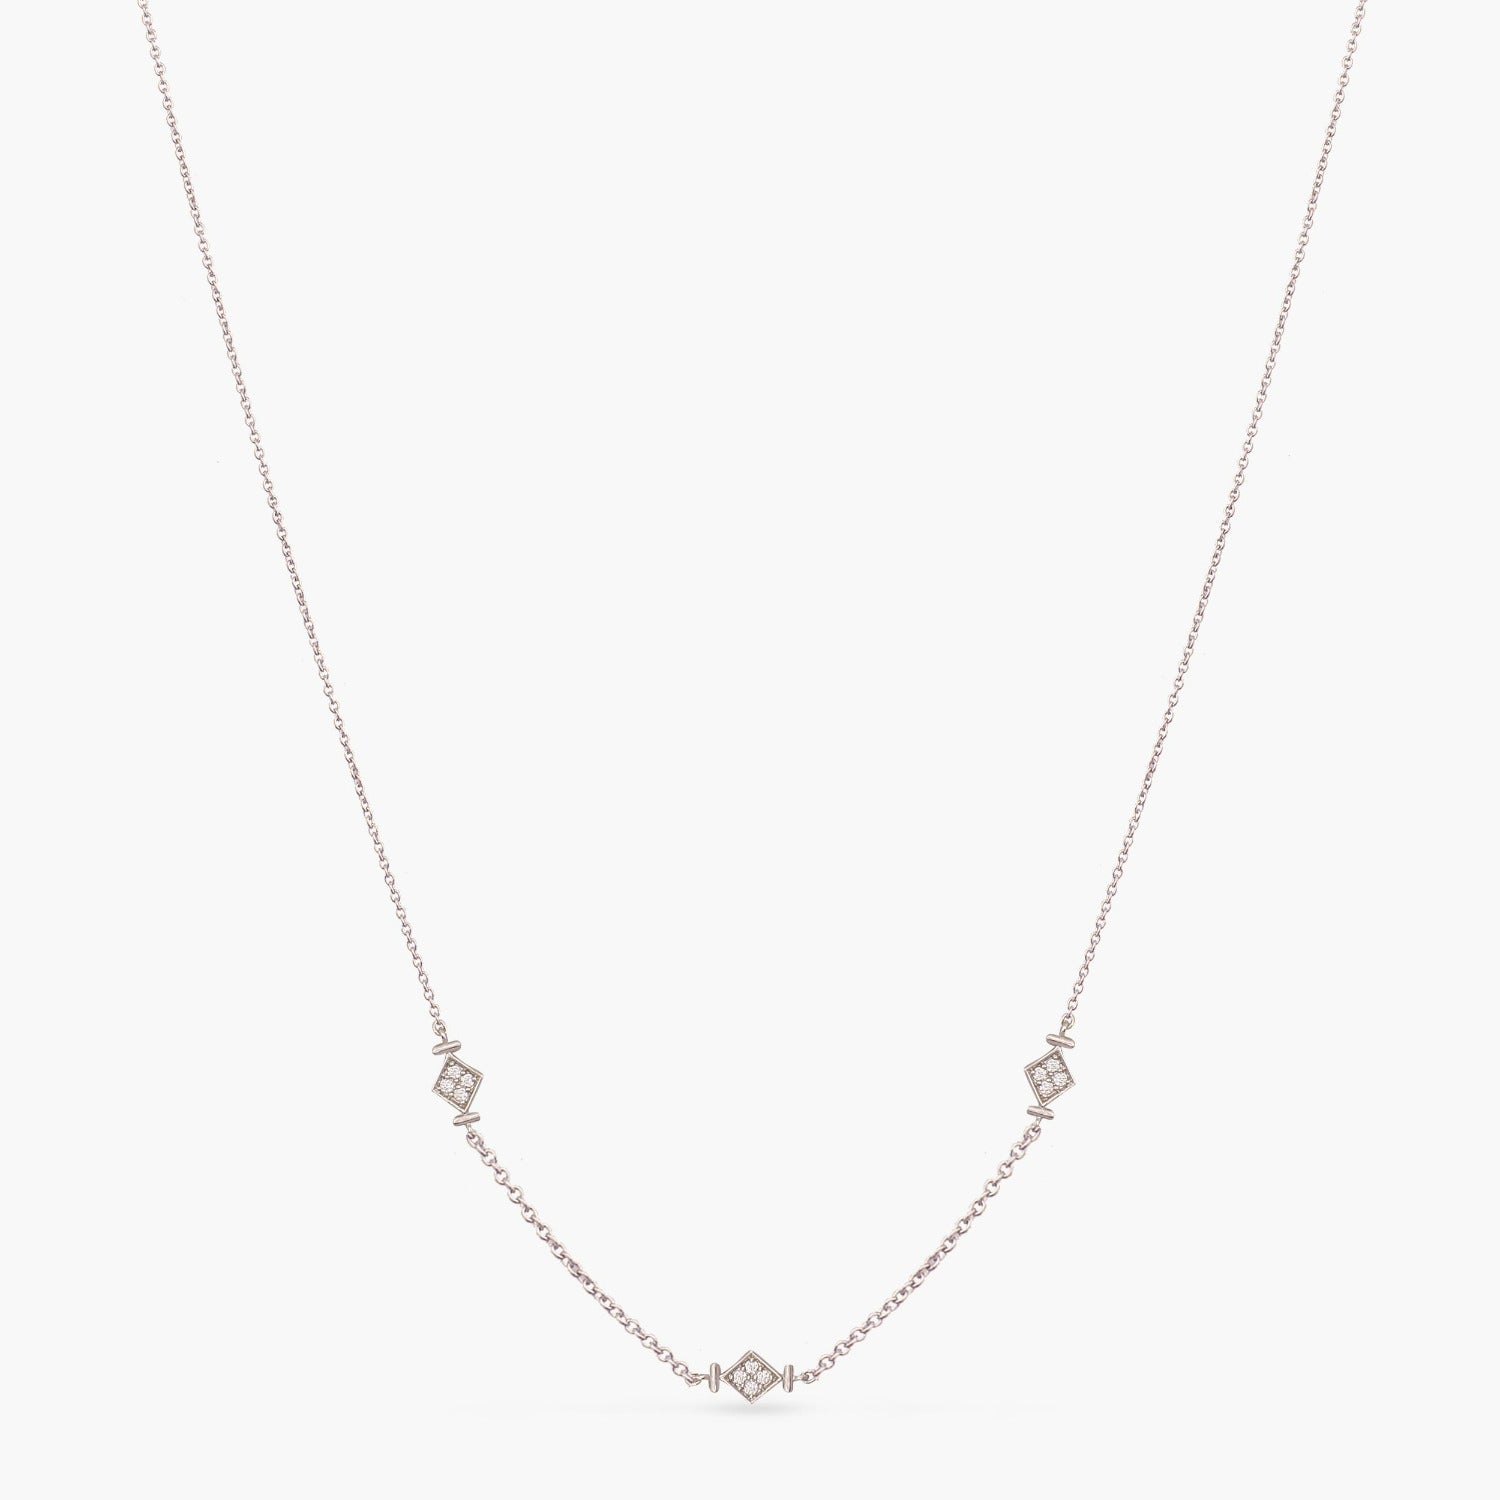 Simple Delicate Silver Necklace